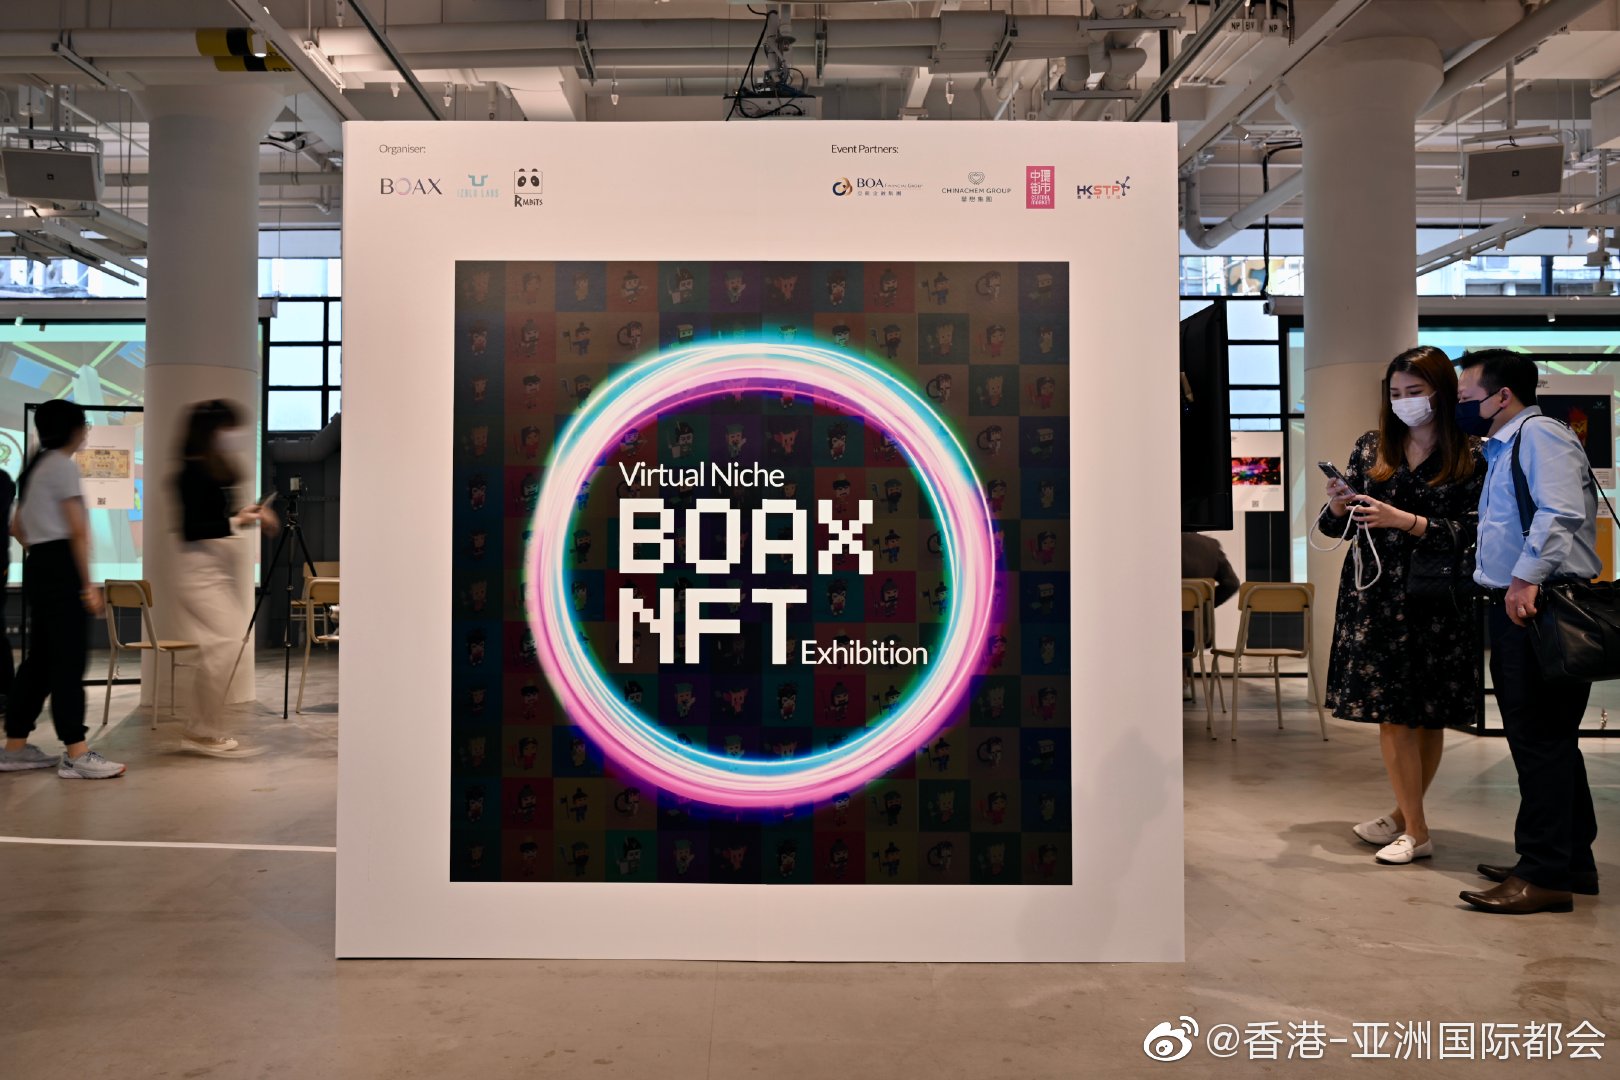 【NFT艺术展开拓崭新创意之旅】
由非同质化代币(NFT)数字资产交易平台BOAX早前(5月4日)举办的「BOAX NFT Exhibition」，结合数码艺术及金融科技，为历史悠久的中环街市增添创新元素。展览展示一系列 NFT作品，包括世界首创、揉合NFT设计美学与风水的「BOAX Feng Shui Art NFTs」等。 ​